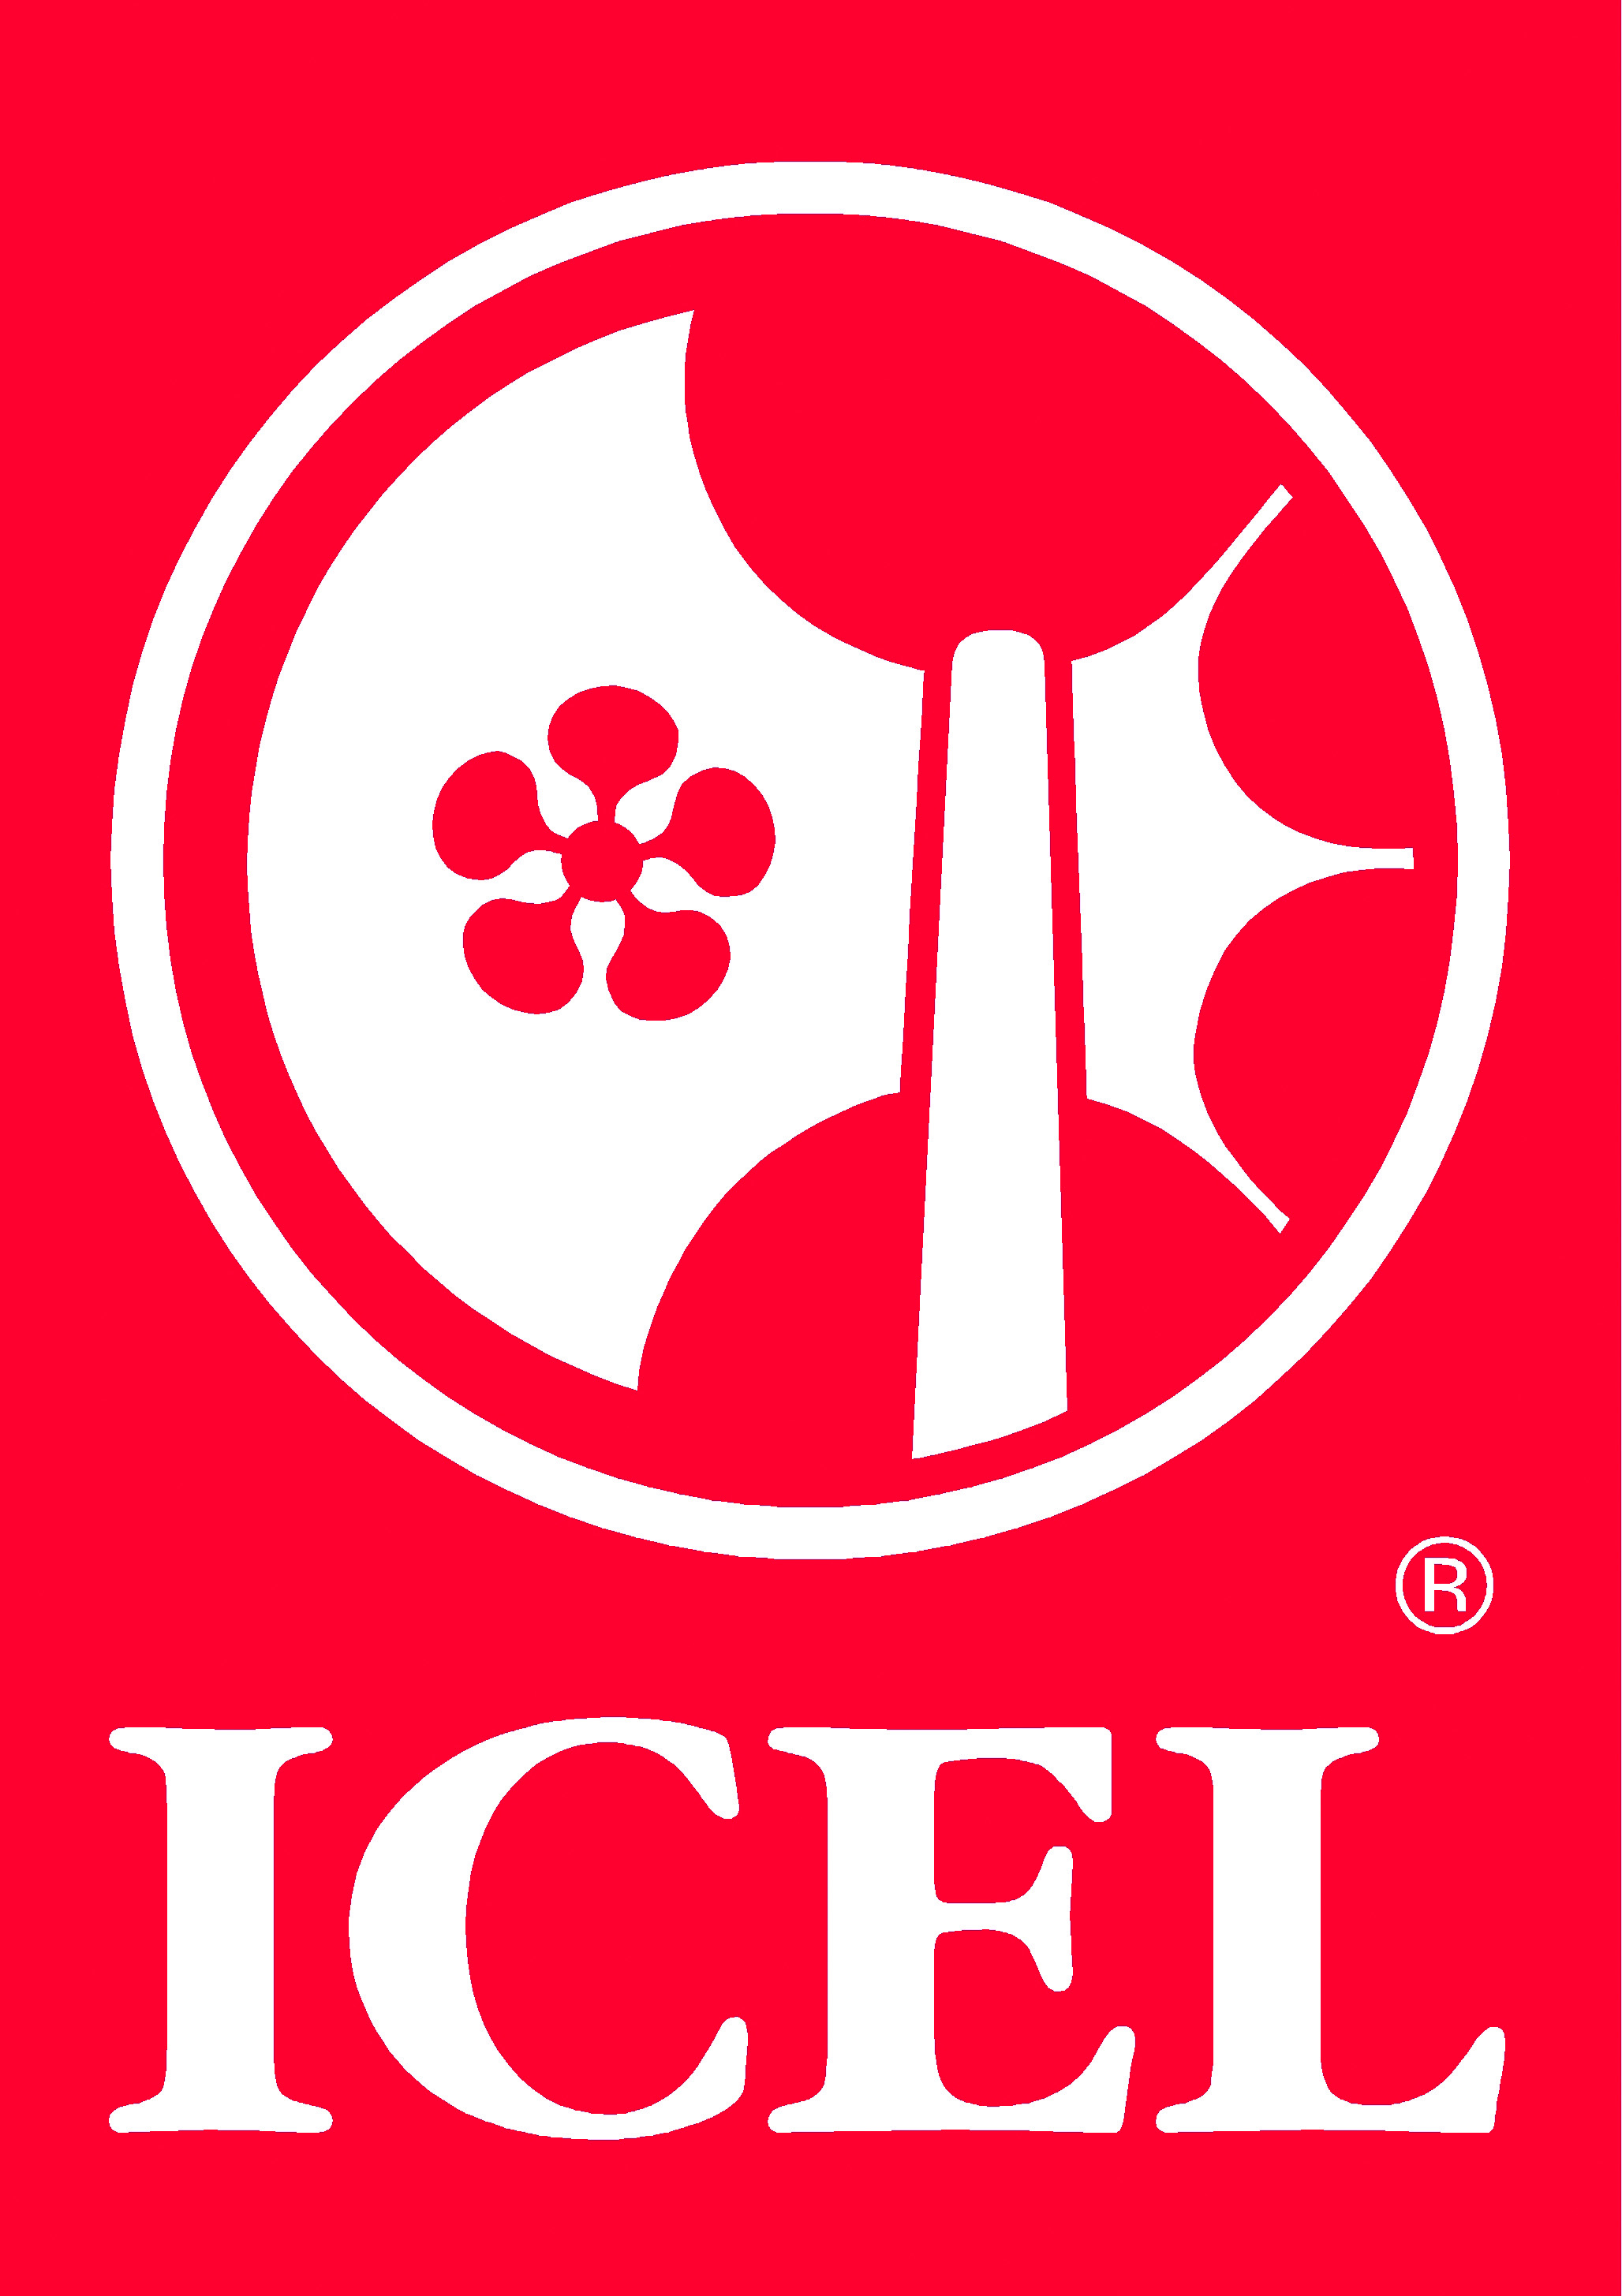 ICEL brand